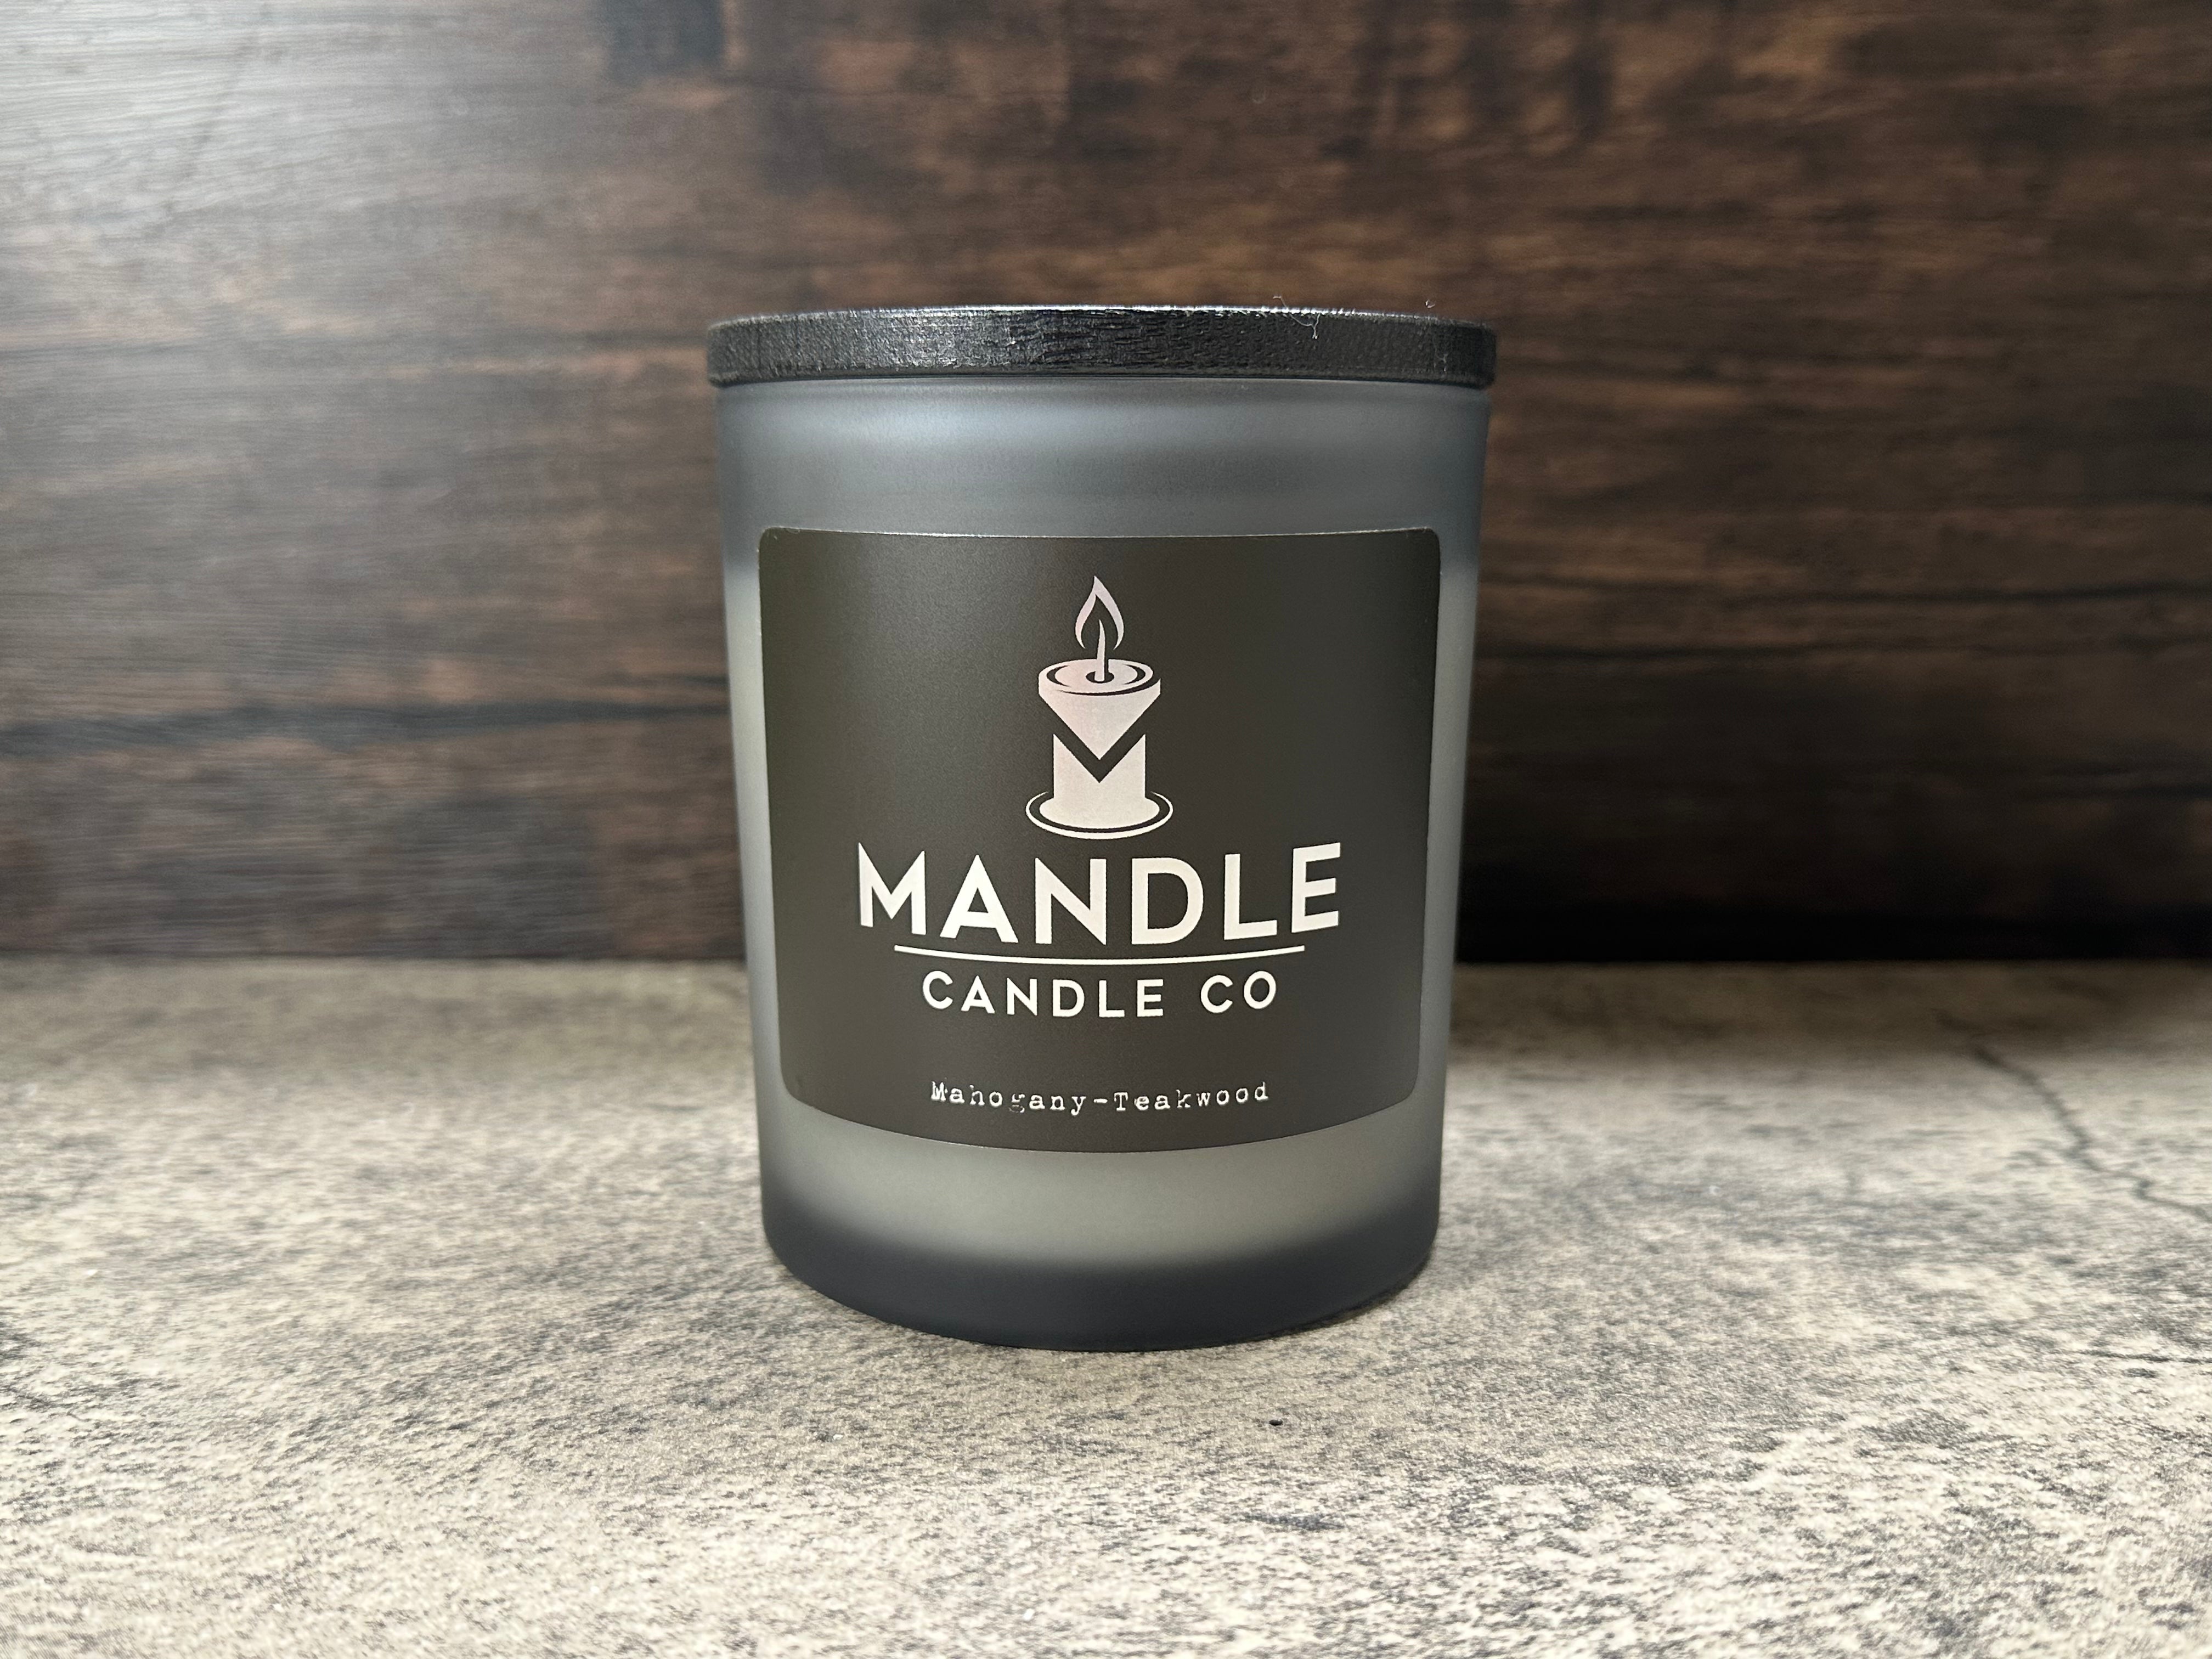 Teakwood + Mahogany Scented Candle – C & E Craft Co